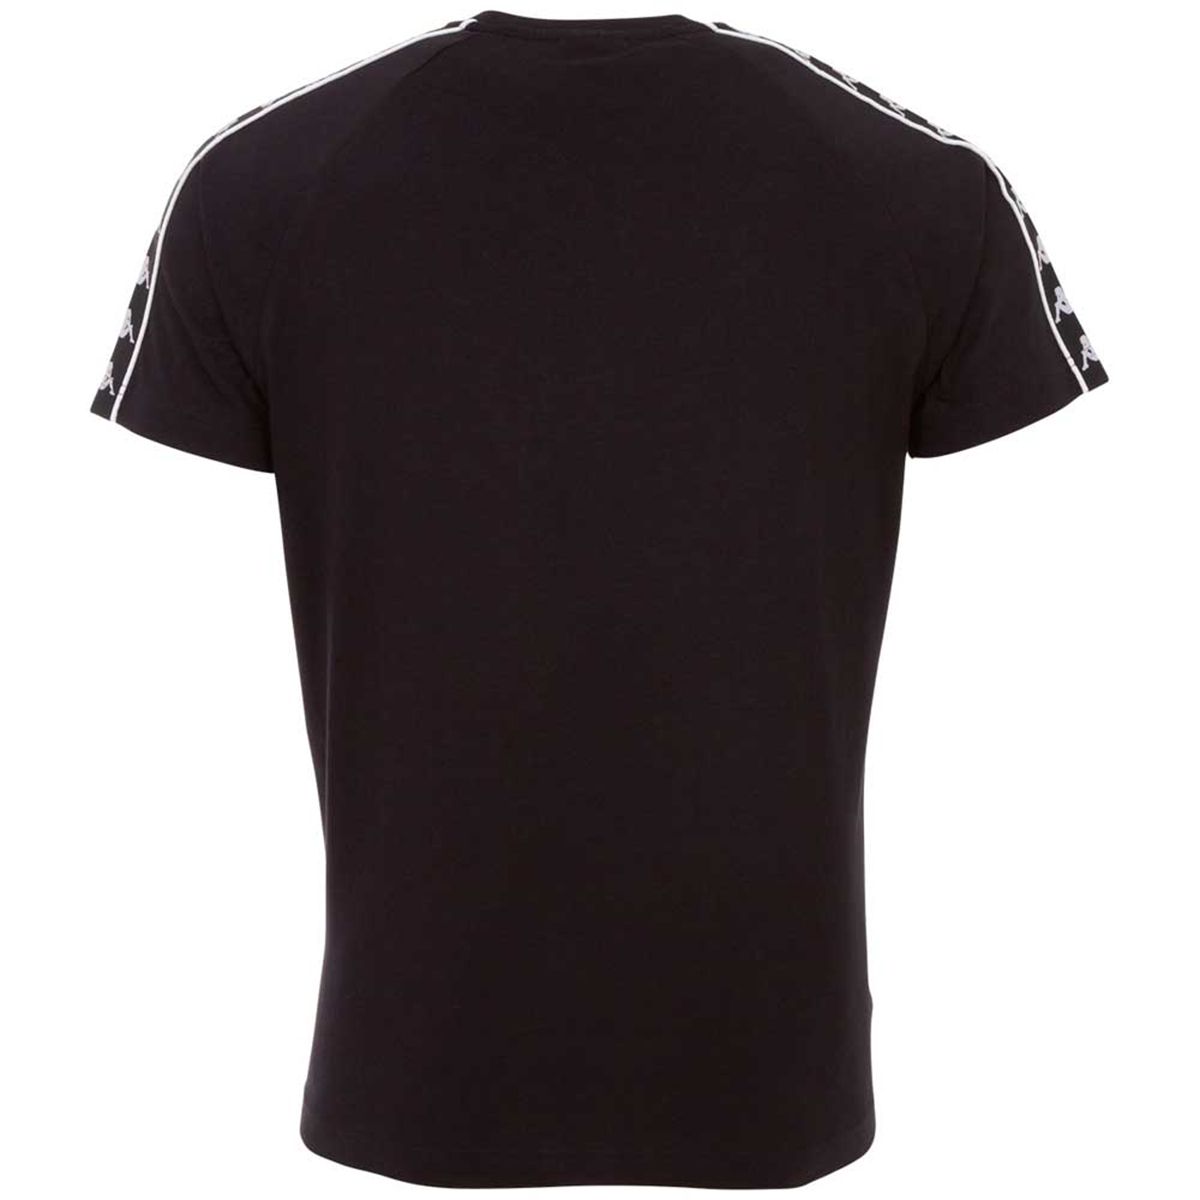 Kappa Unisex T-Shirt Authentic FINLEY Unisex Damen Herren 306013 schwarz